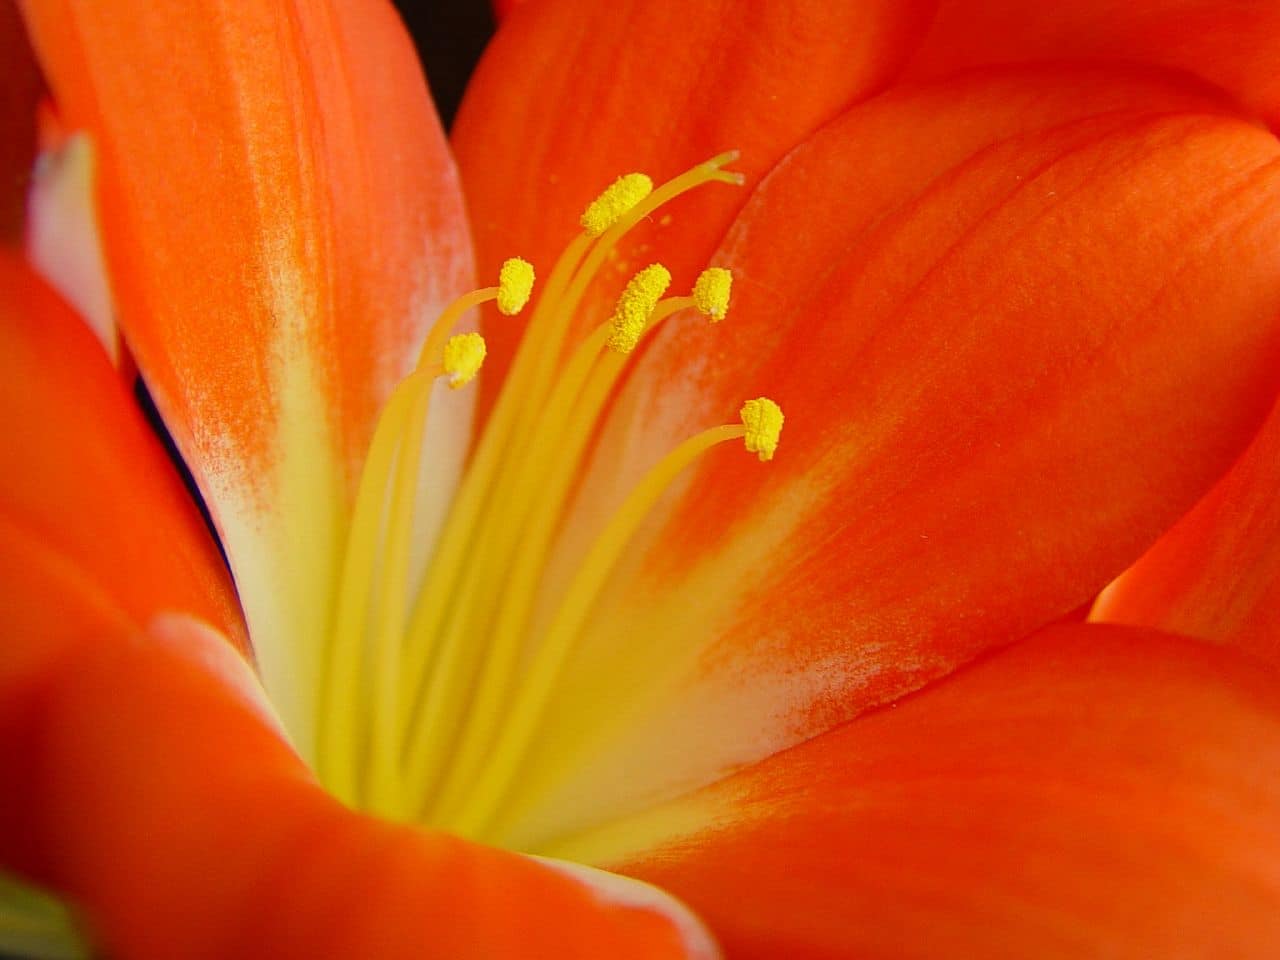 Kaffir Lily. (Clivia miniata).
